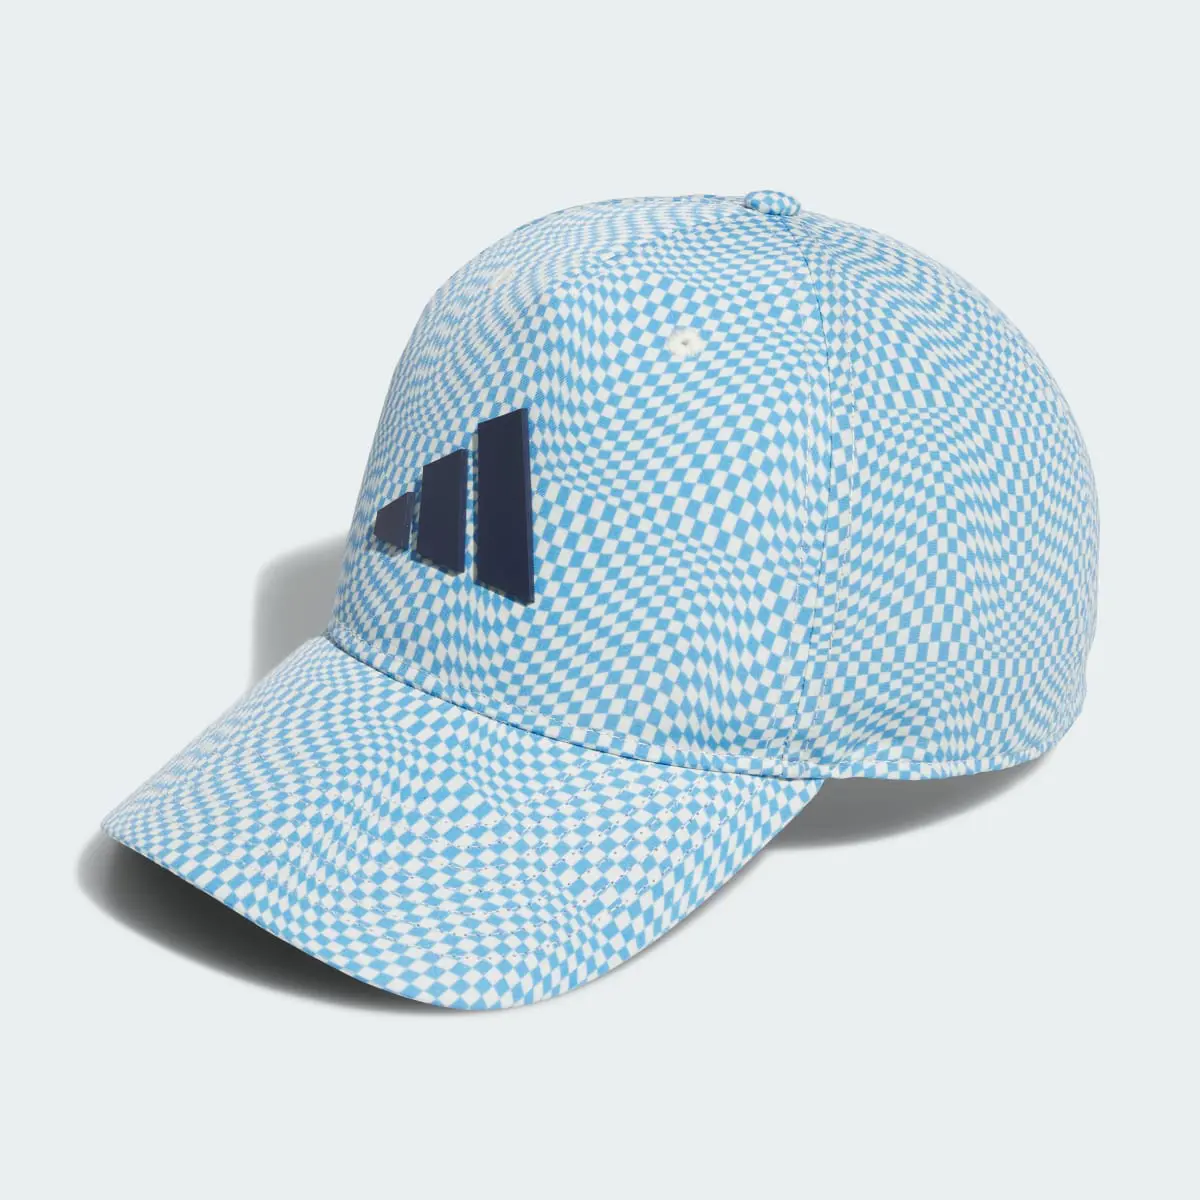 Adidas Tour Printed Snapback Hat. 2